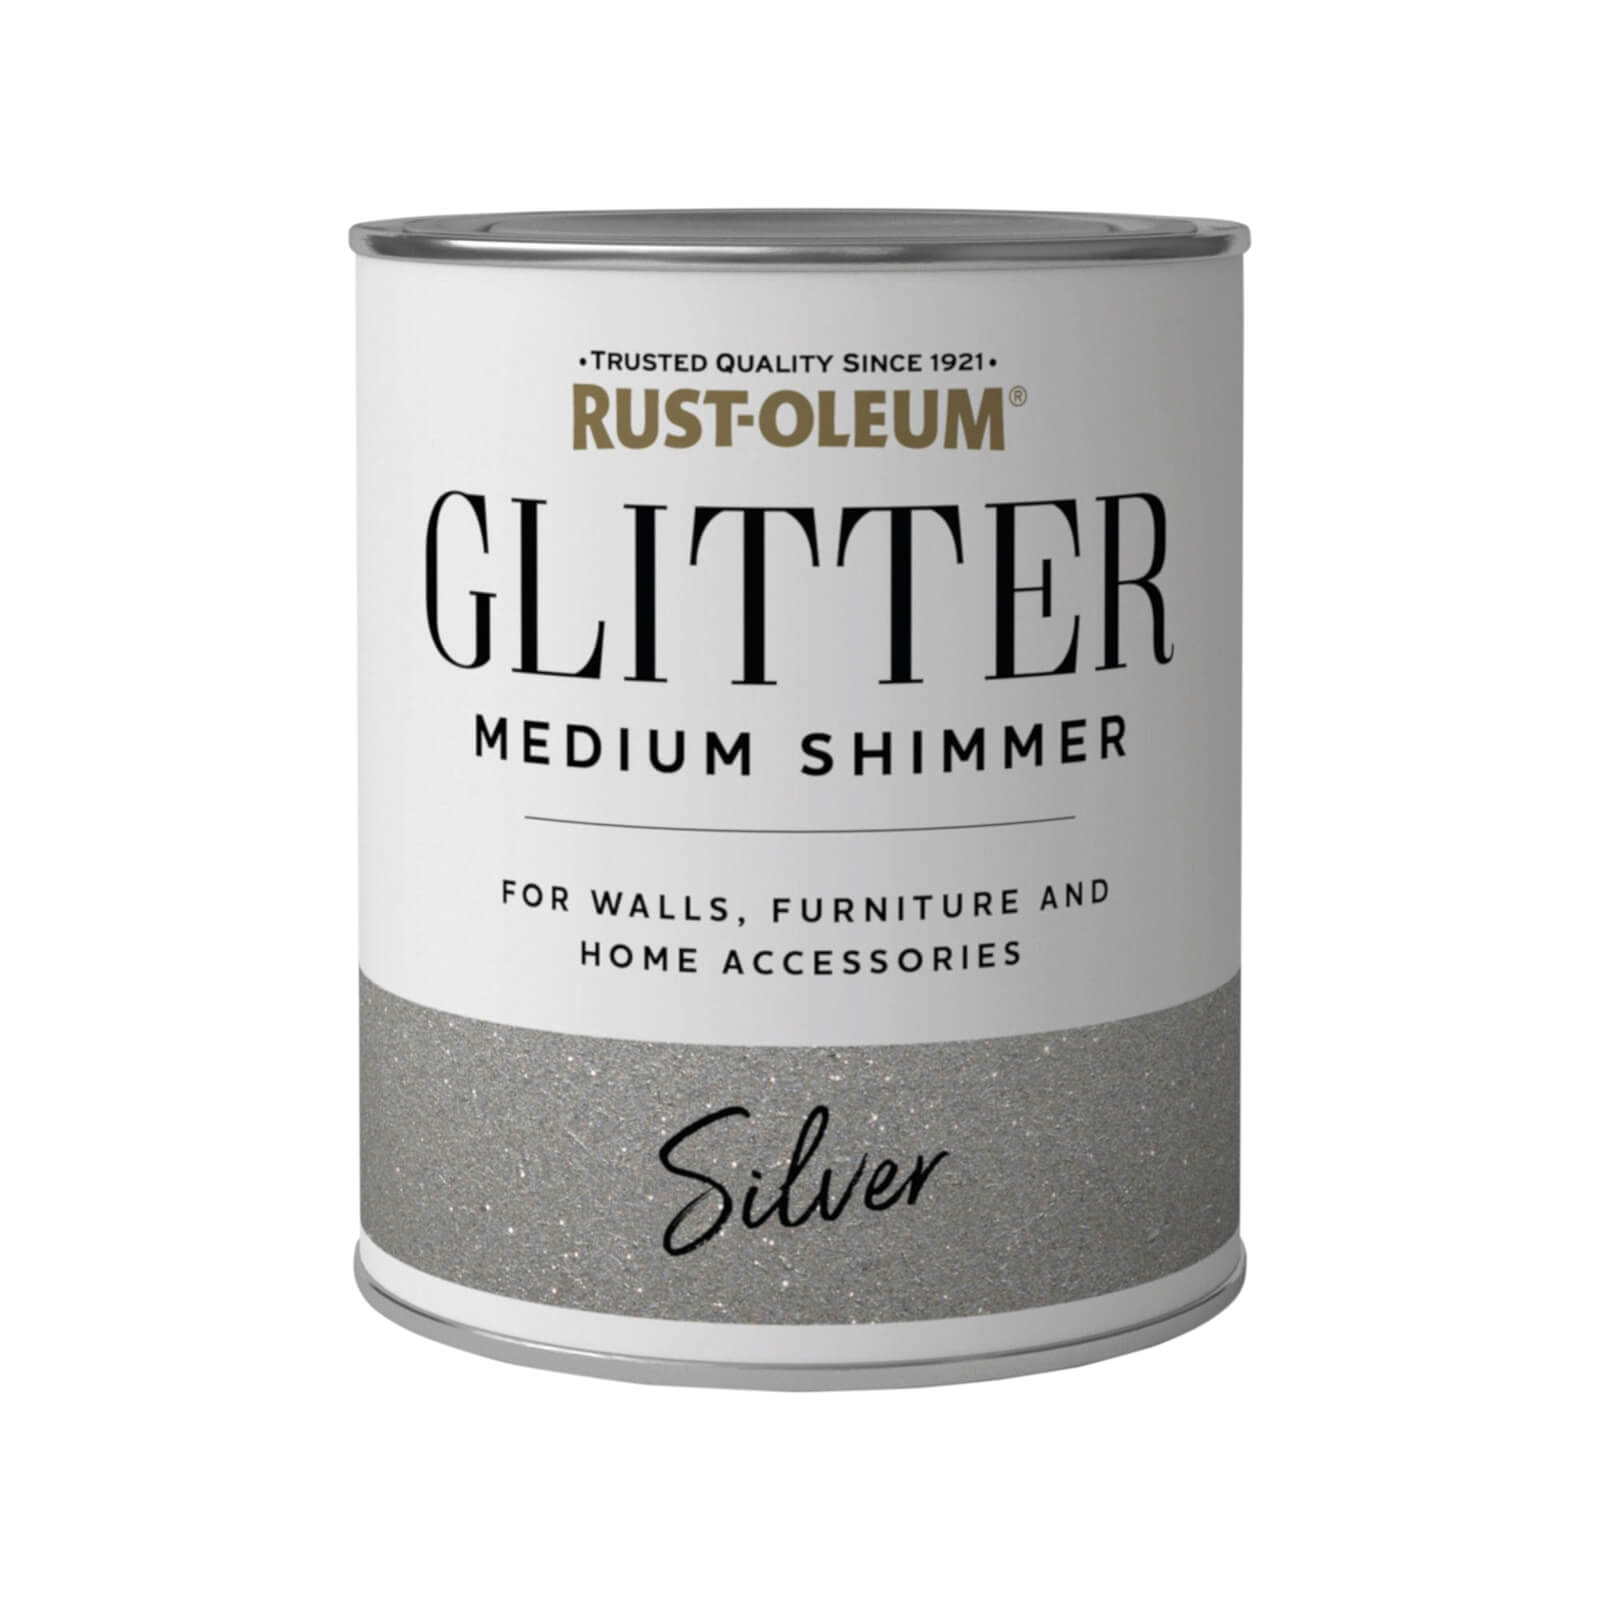 Photo of Rust-oleum Medium Shimmer Silver Glitter - 750ml